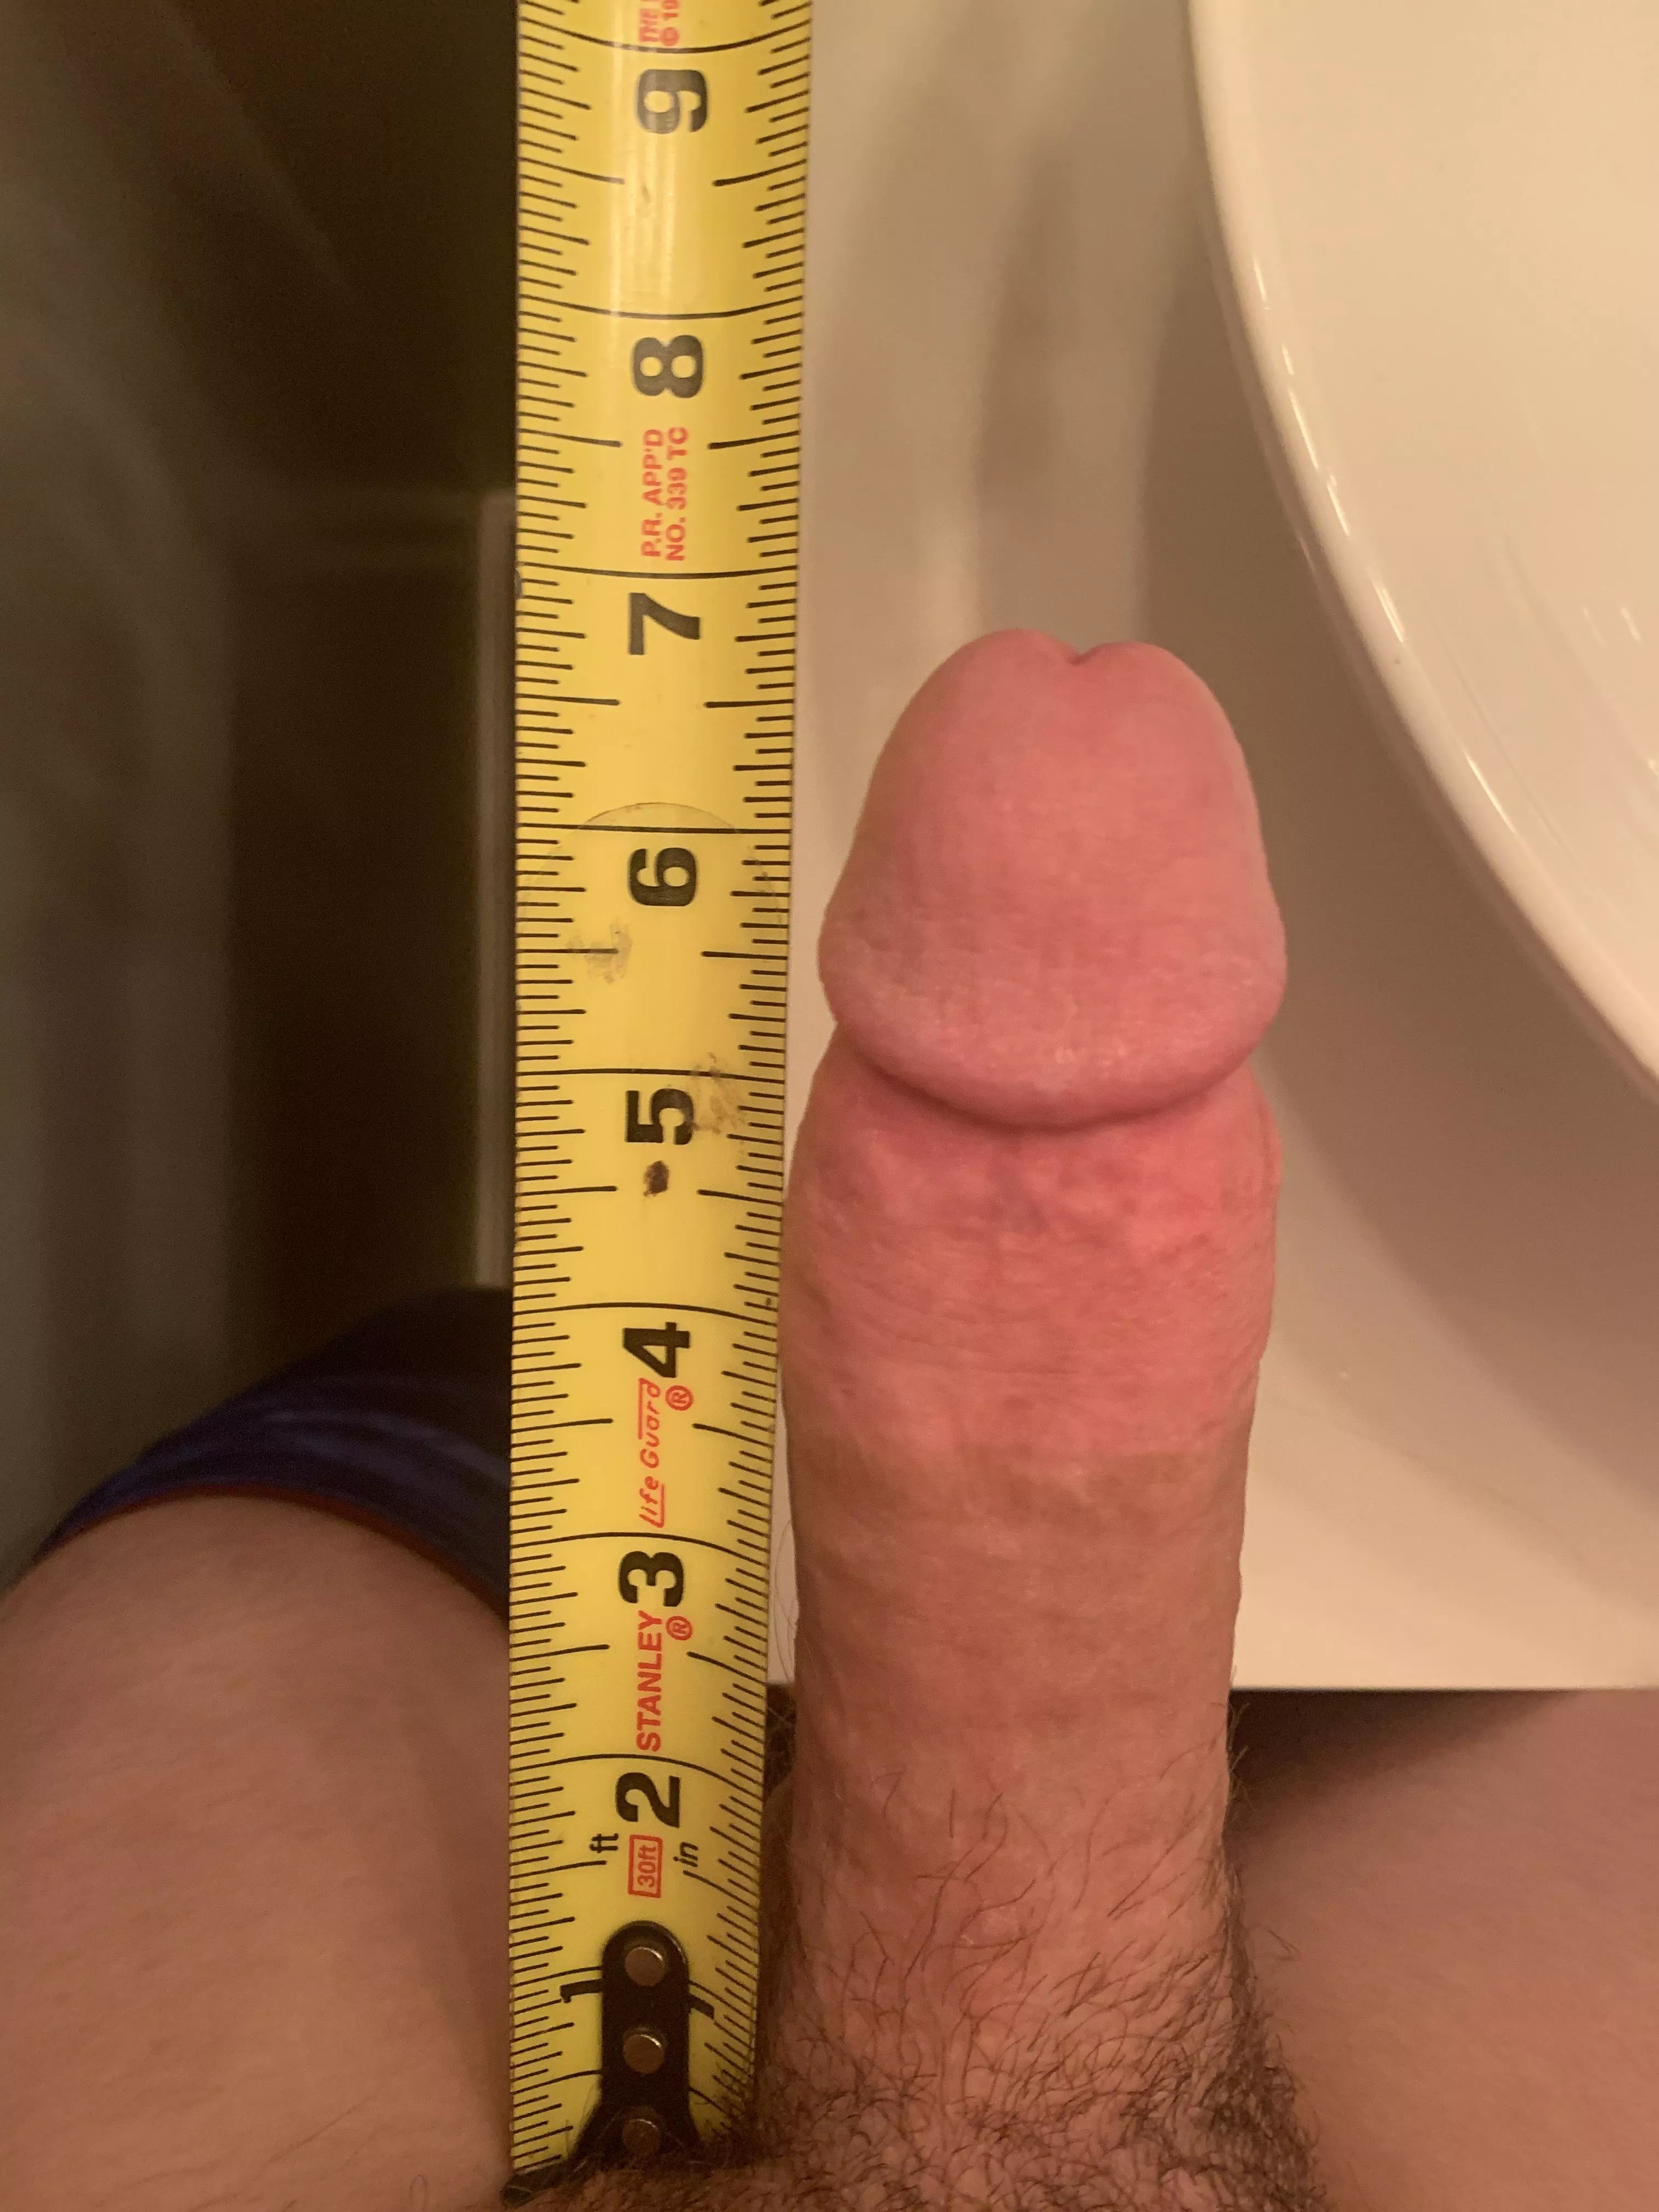 7.48031 inch dick